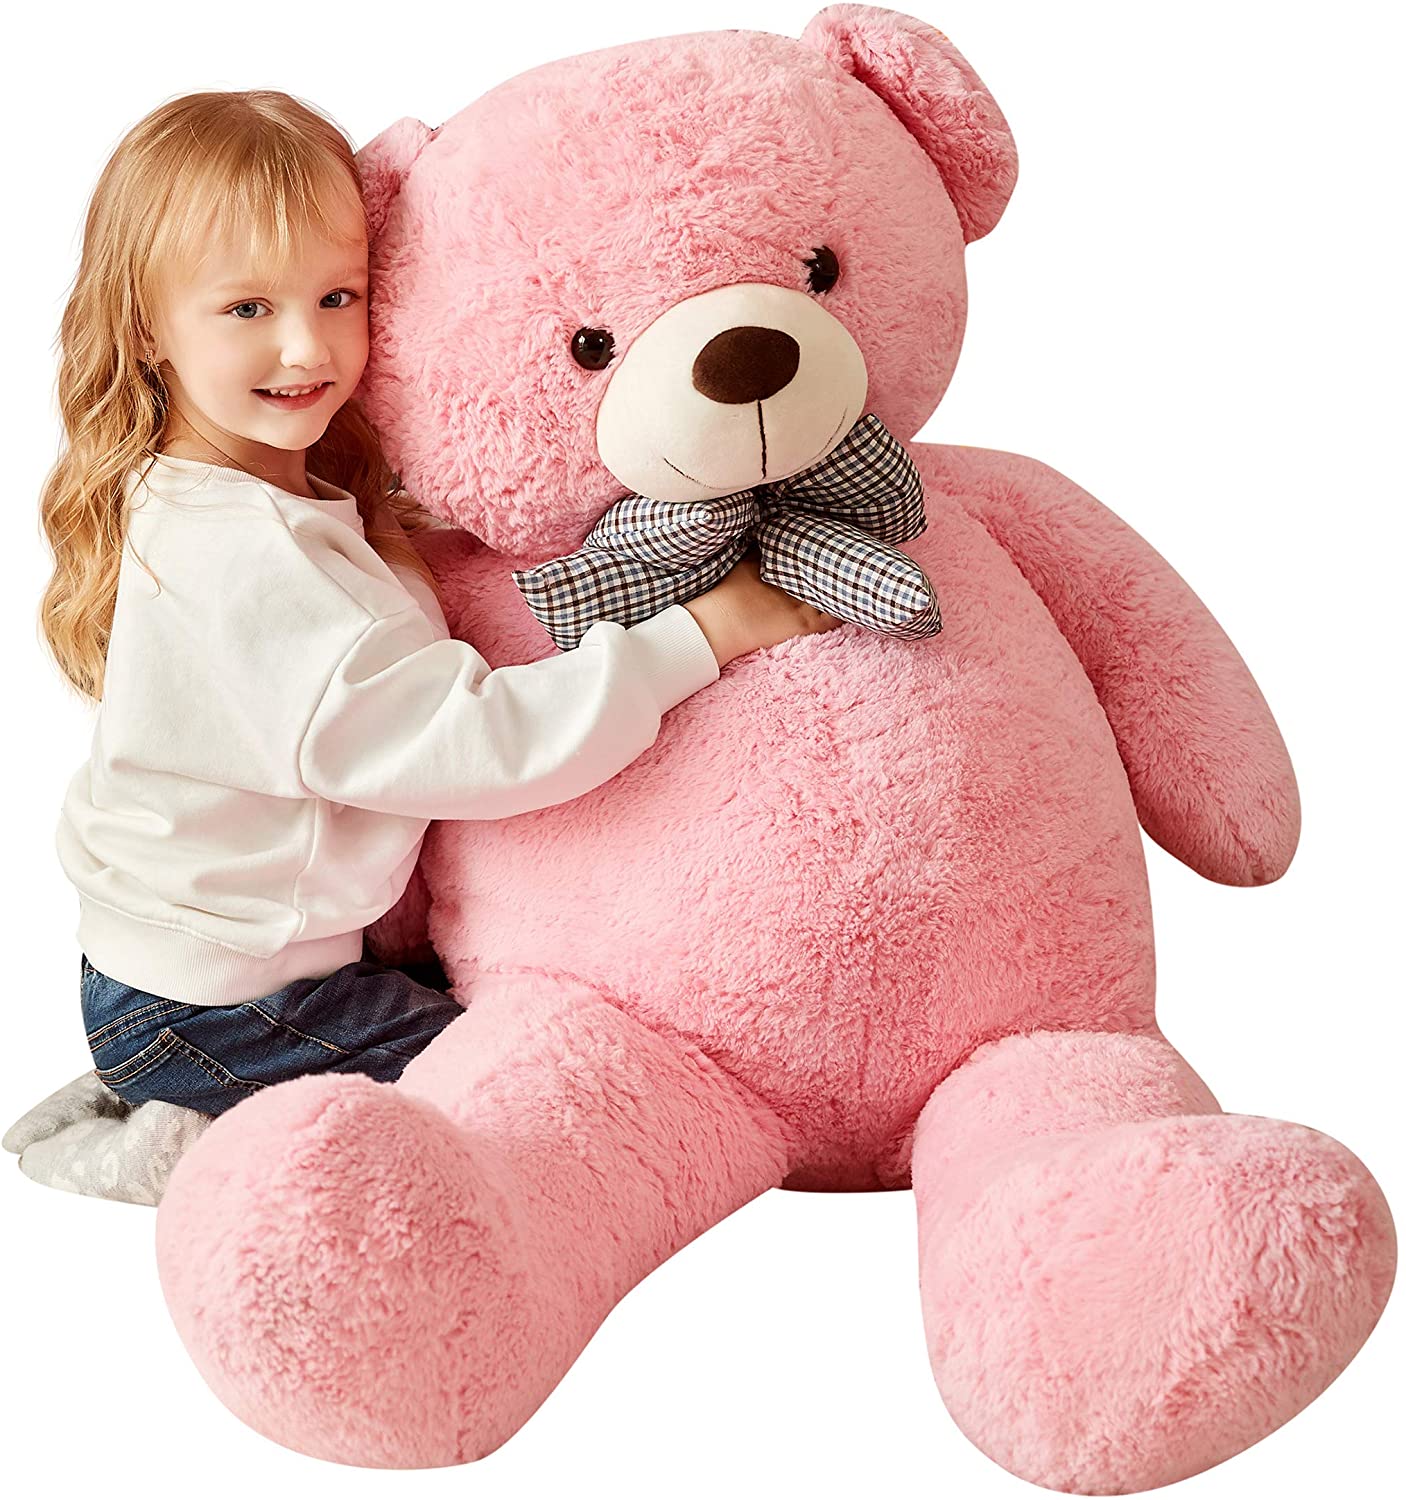 Giant Plush Teddy Bear 47" Stuffed Animal Soft Toy Huge Large Jumbo Gift New 